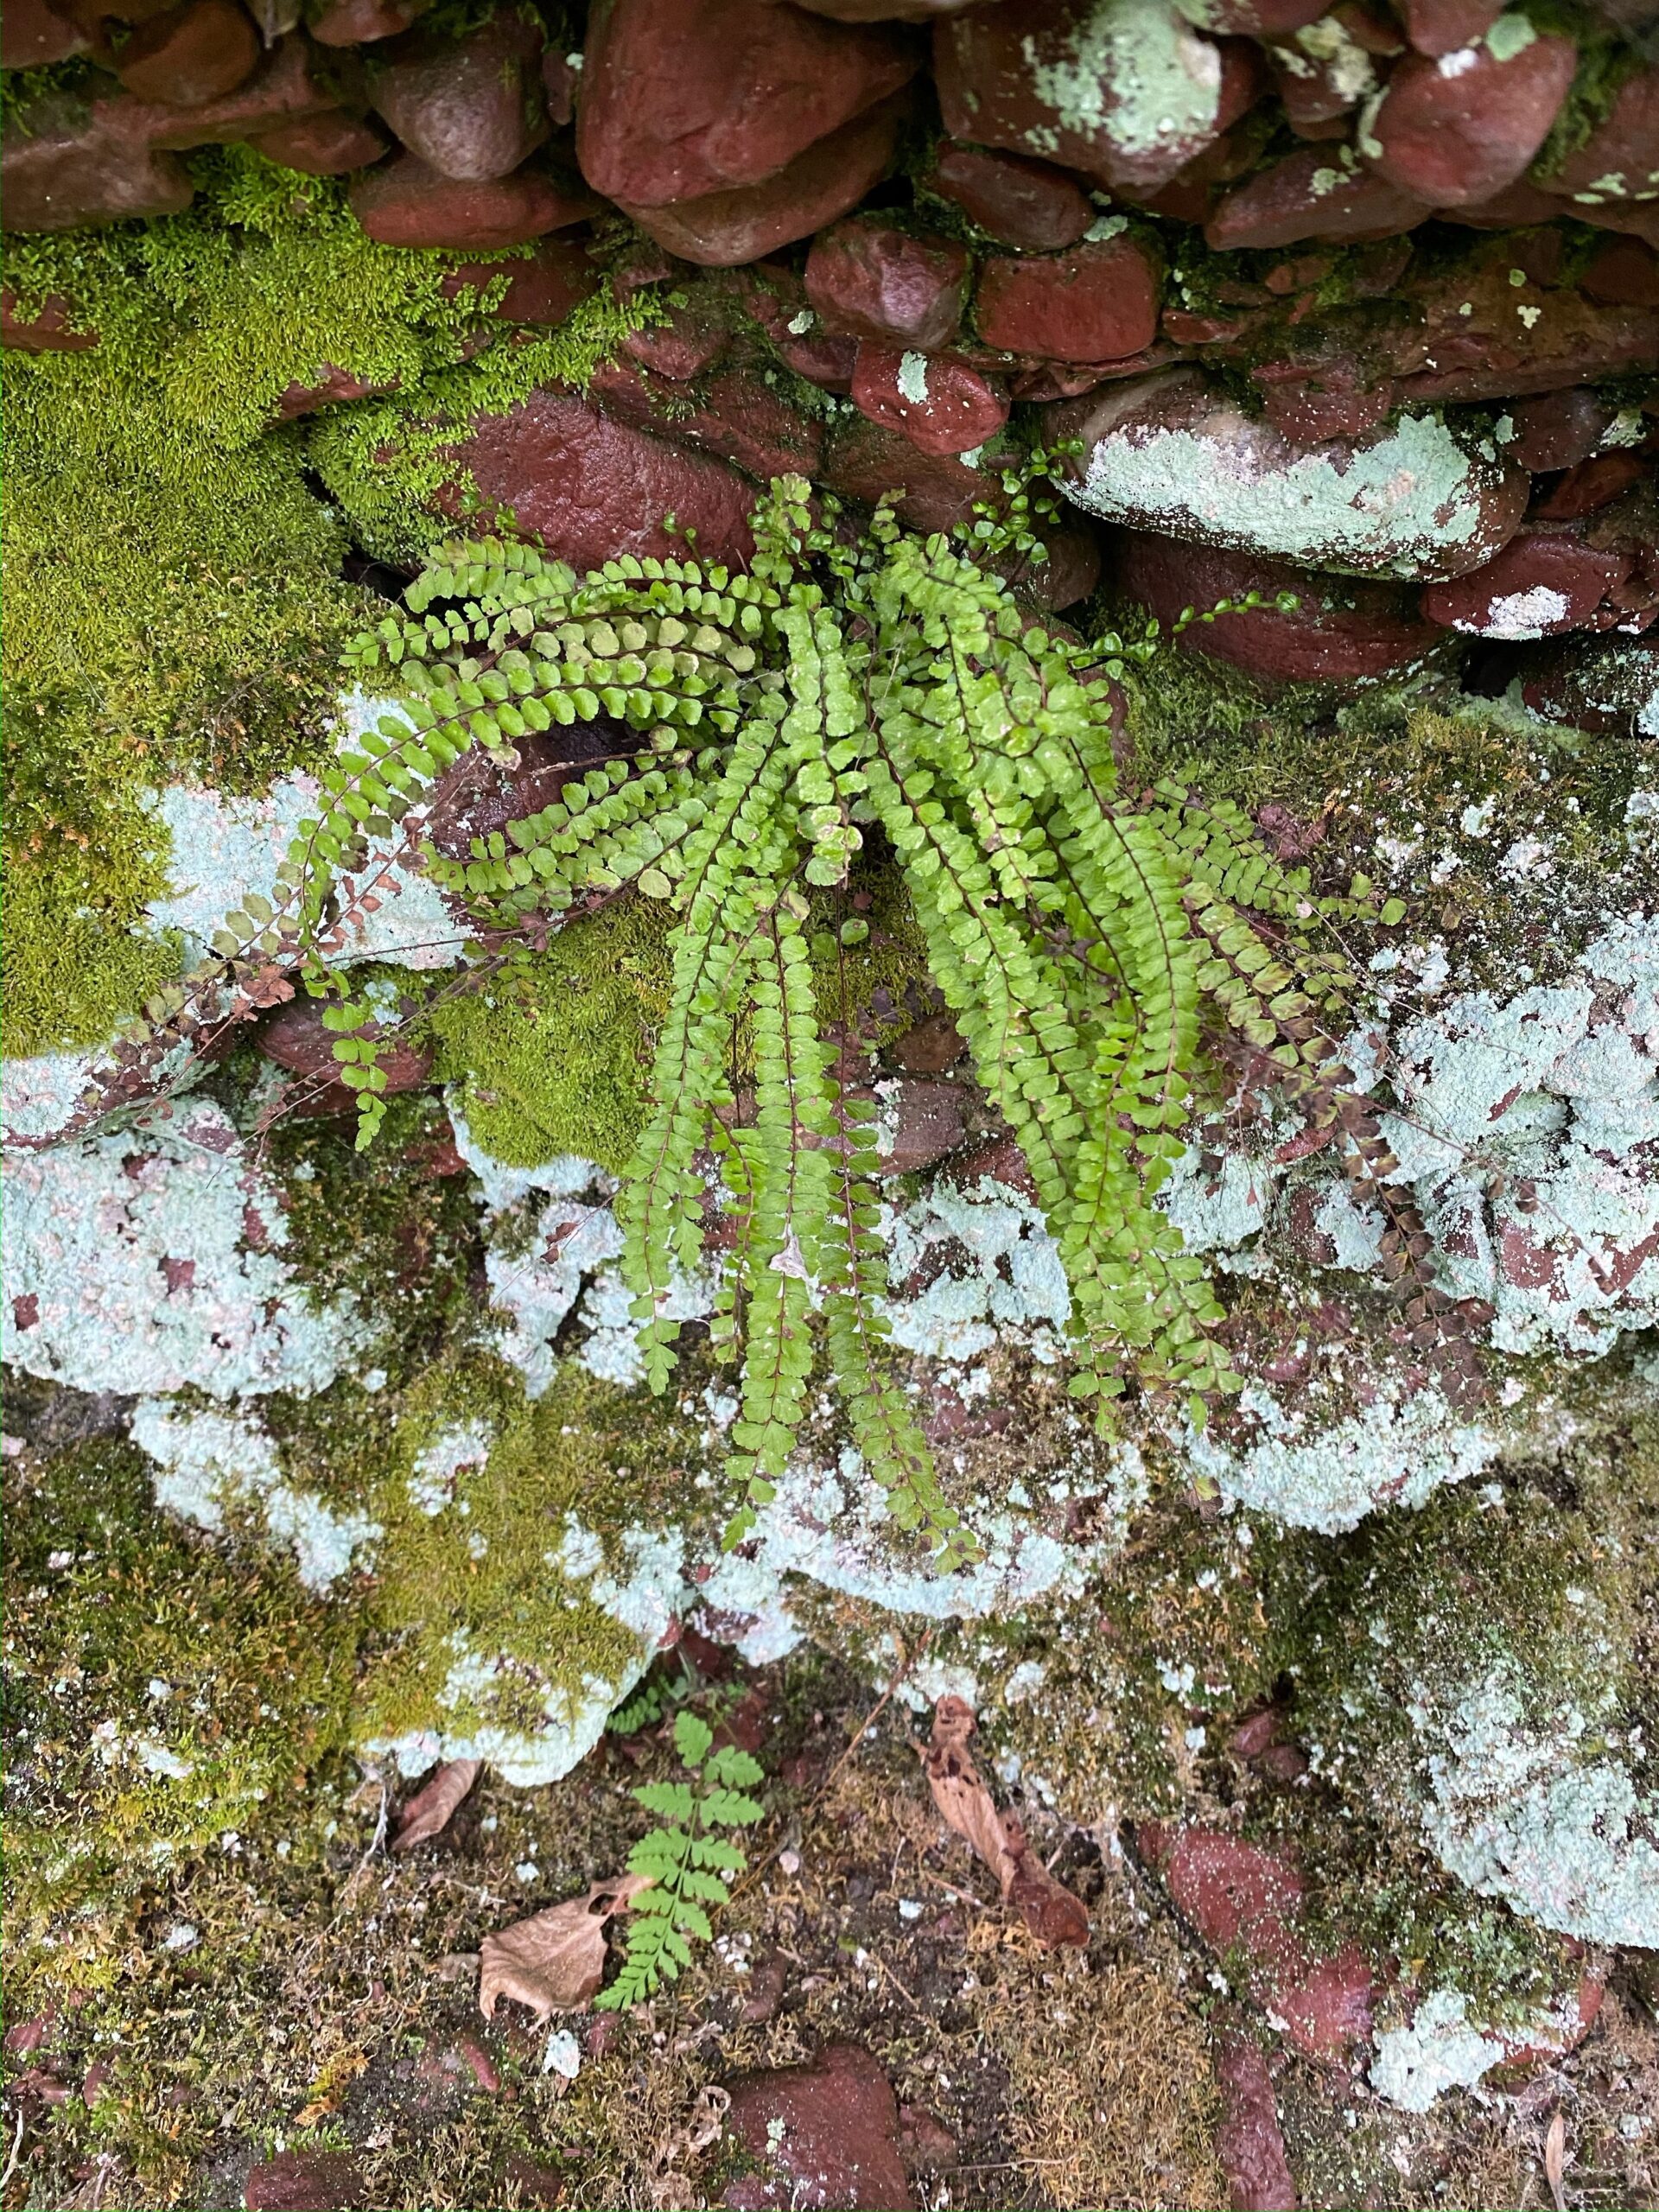 Maidenhair spleenwort is a rare native fern